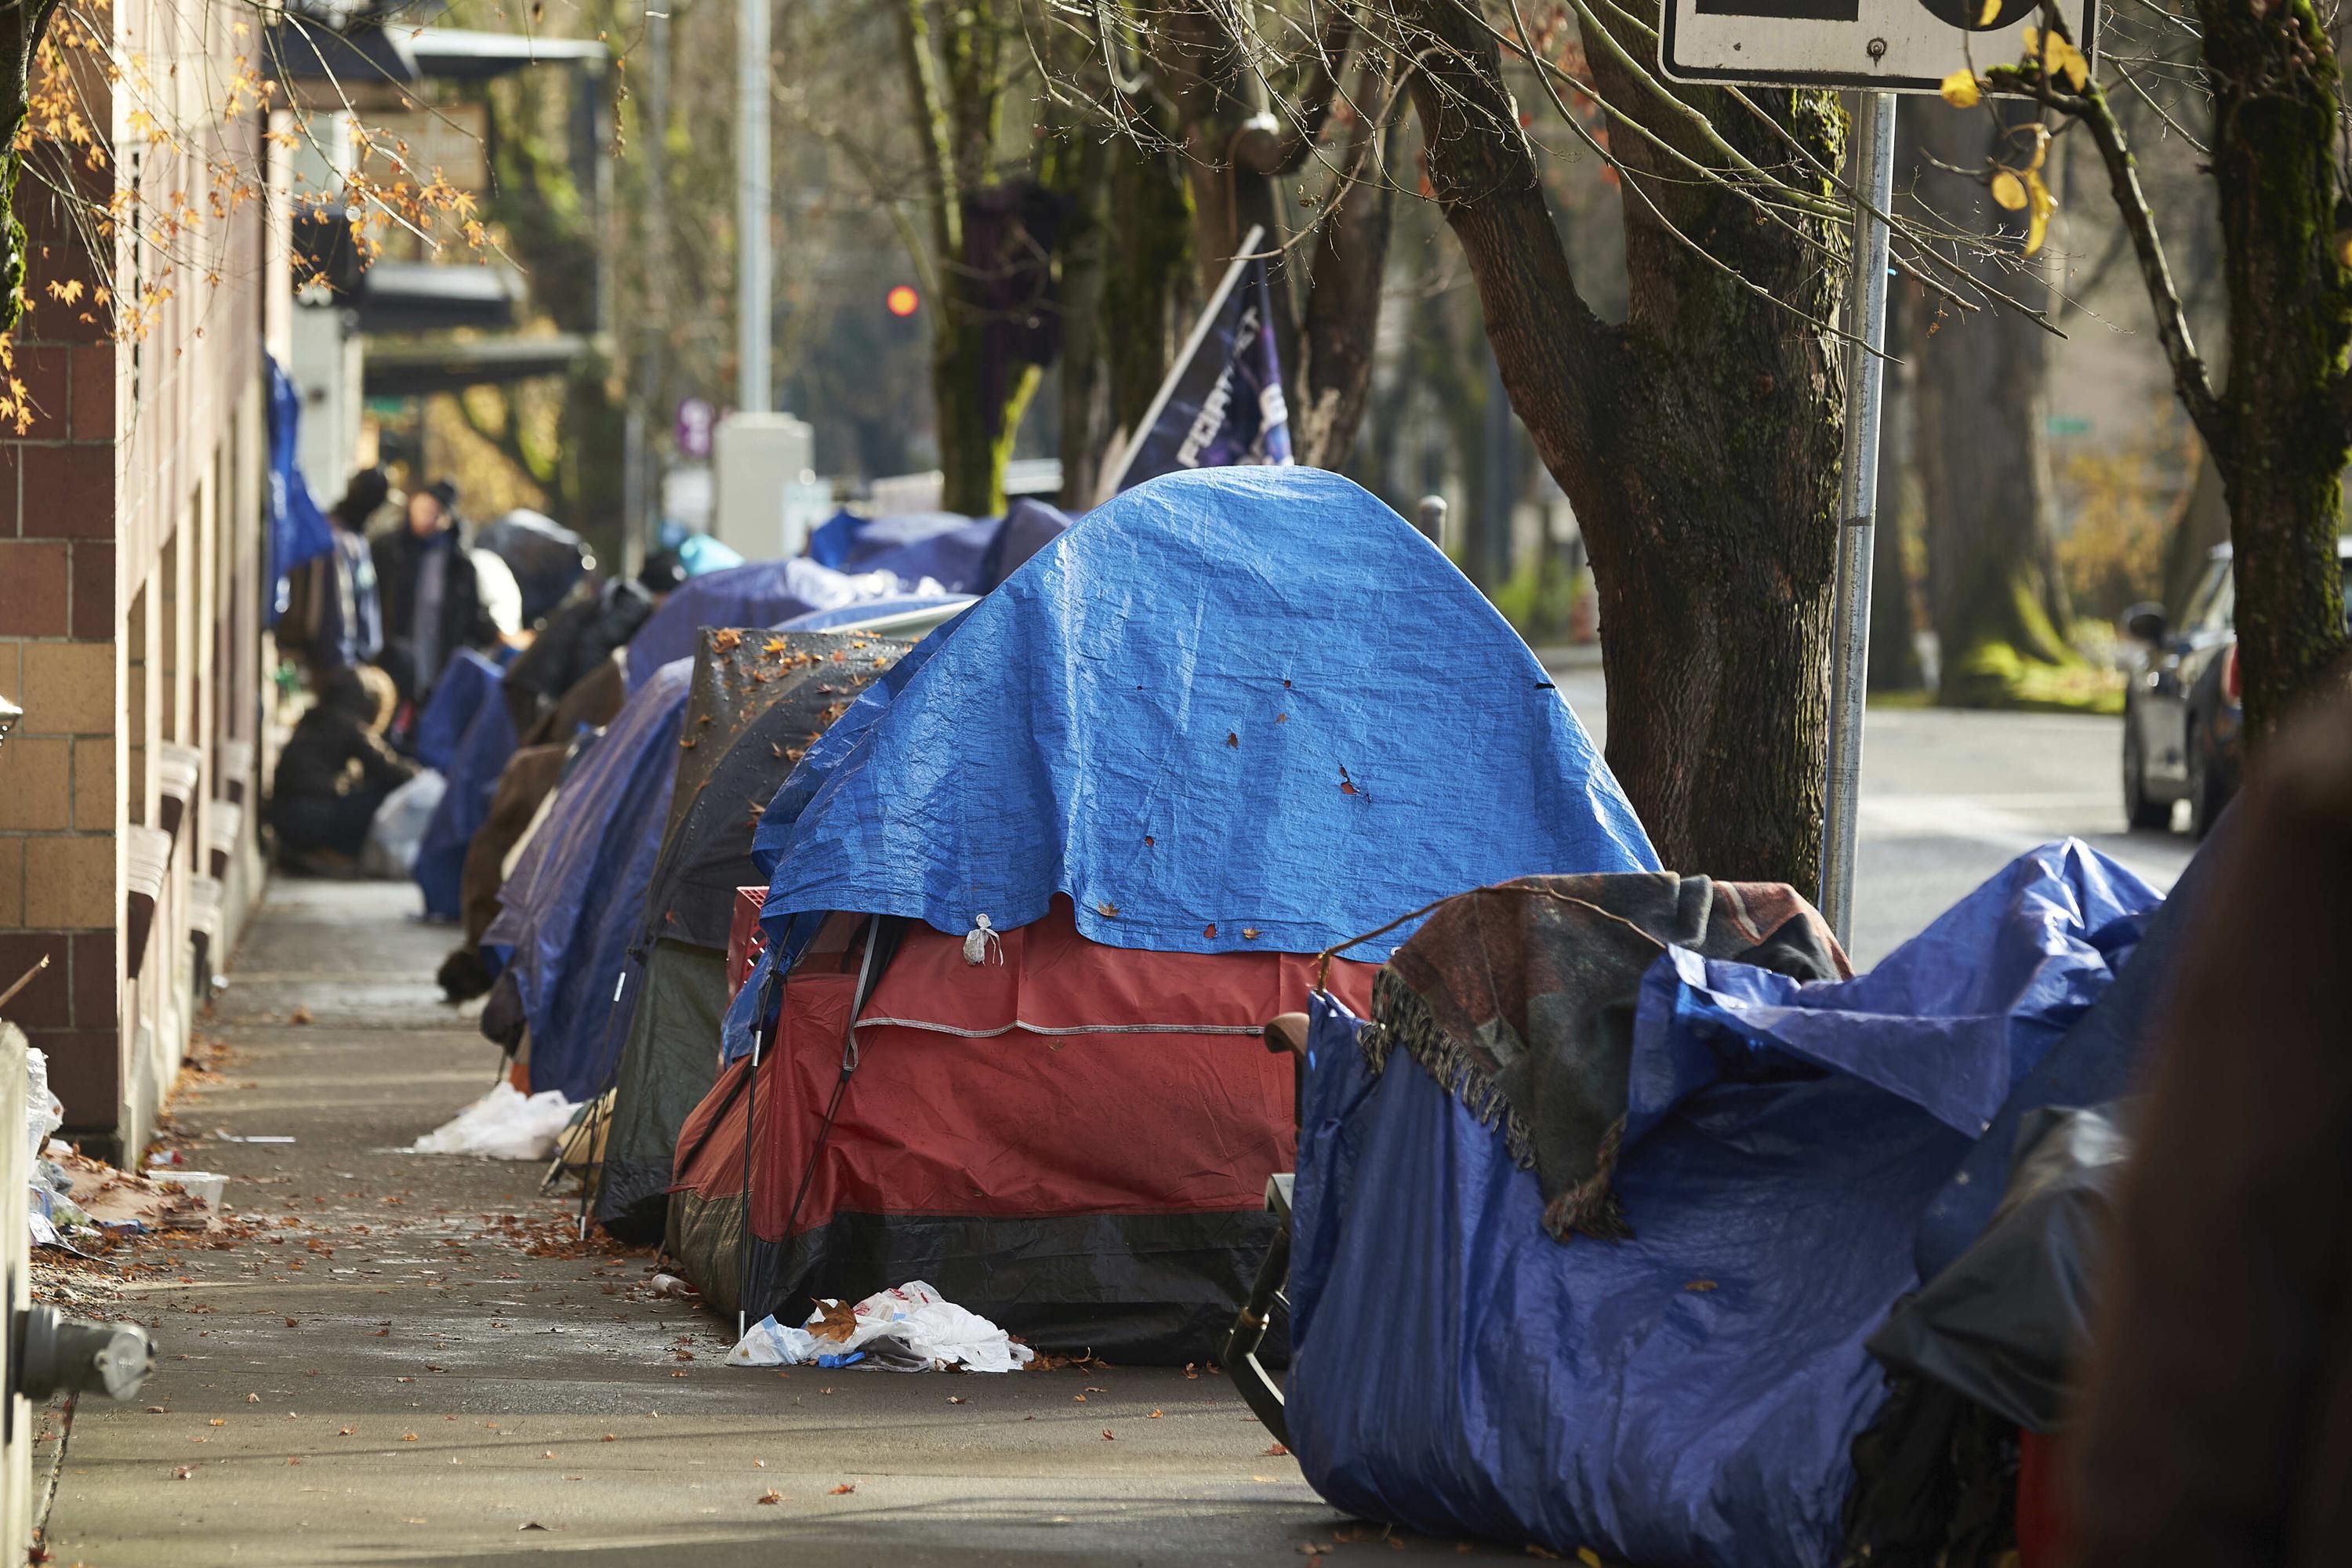 Substances fuel record homeless deaths in Portland, Oregon AP News